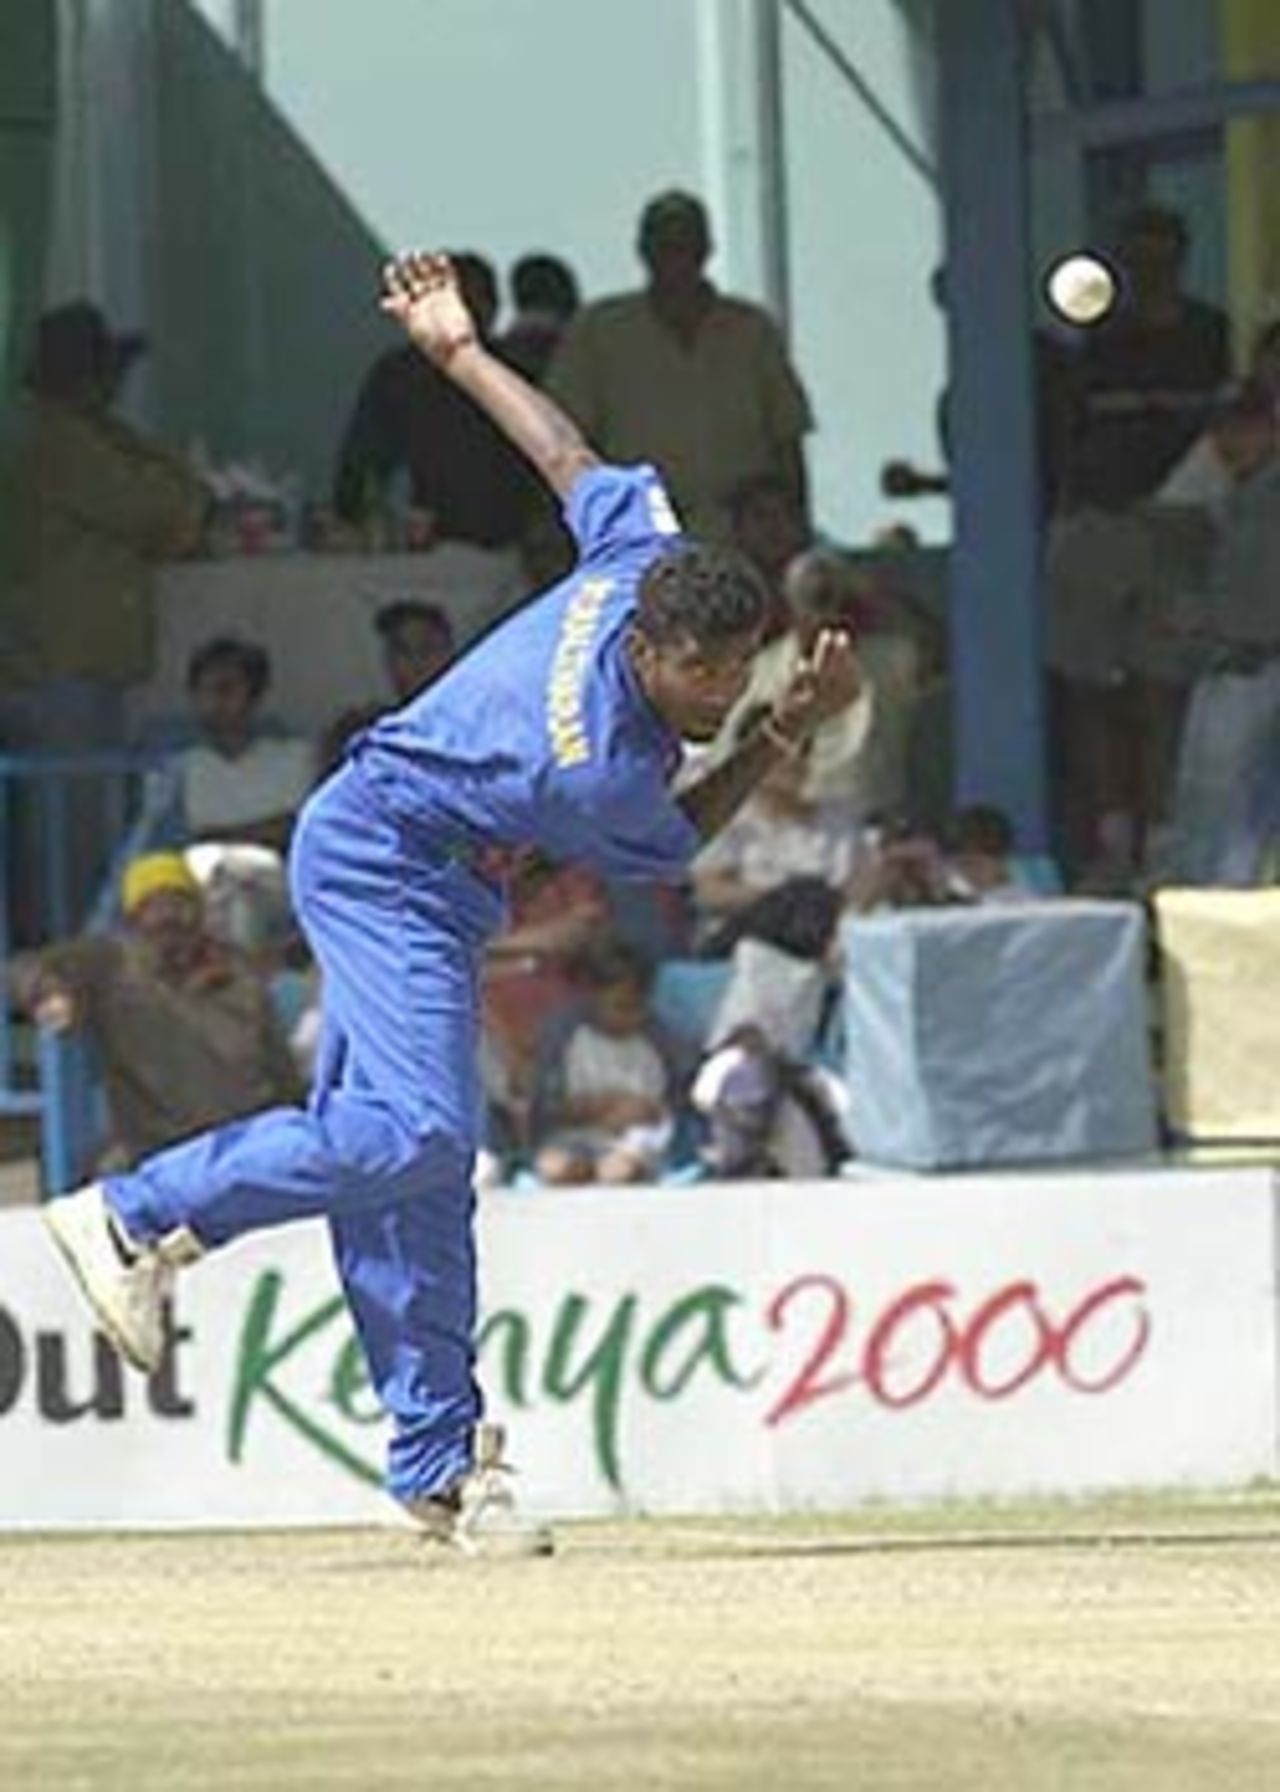 Mutiah Muralitharan lets rip one of his trademark offspinners, ICC KnockOut, 2000/01, 2nd Quarter Final, Pakistan v Sri Lanka, Gymkhana Club Ground, Nairobi, 08 October 2000.